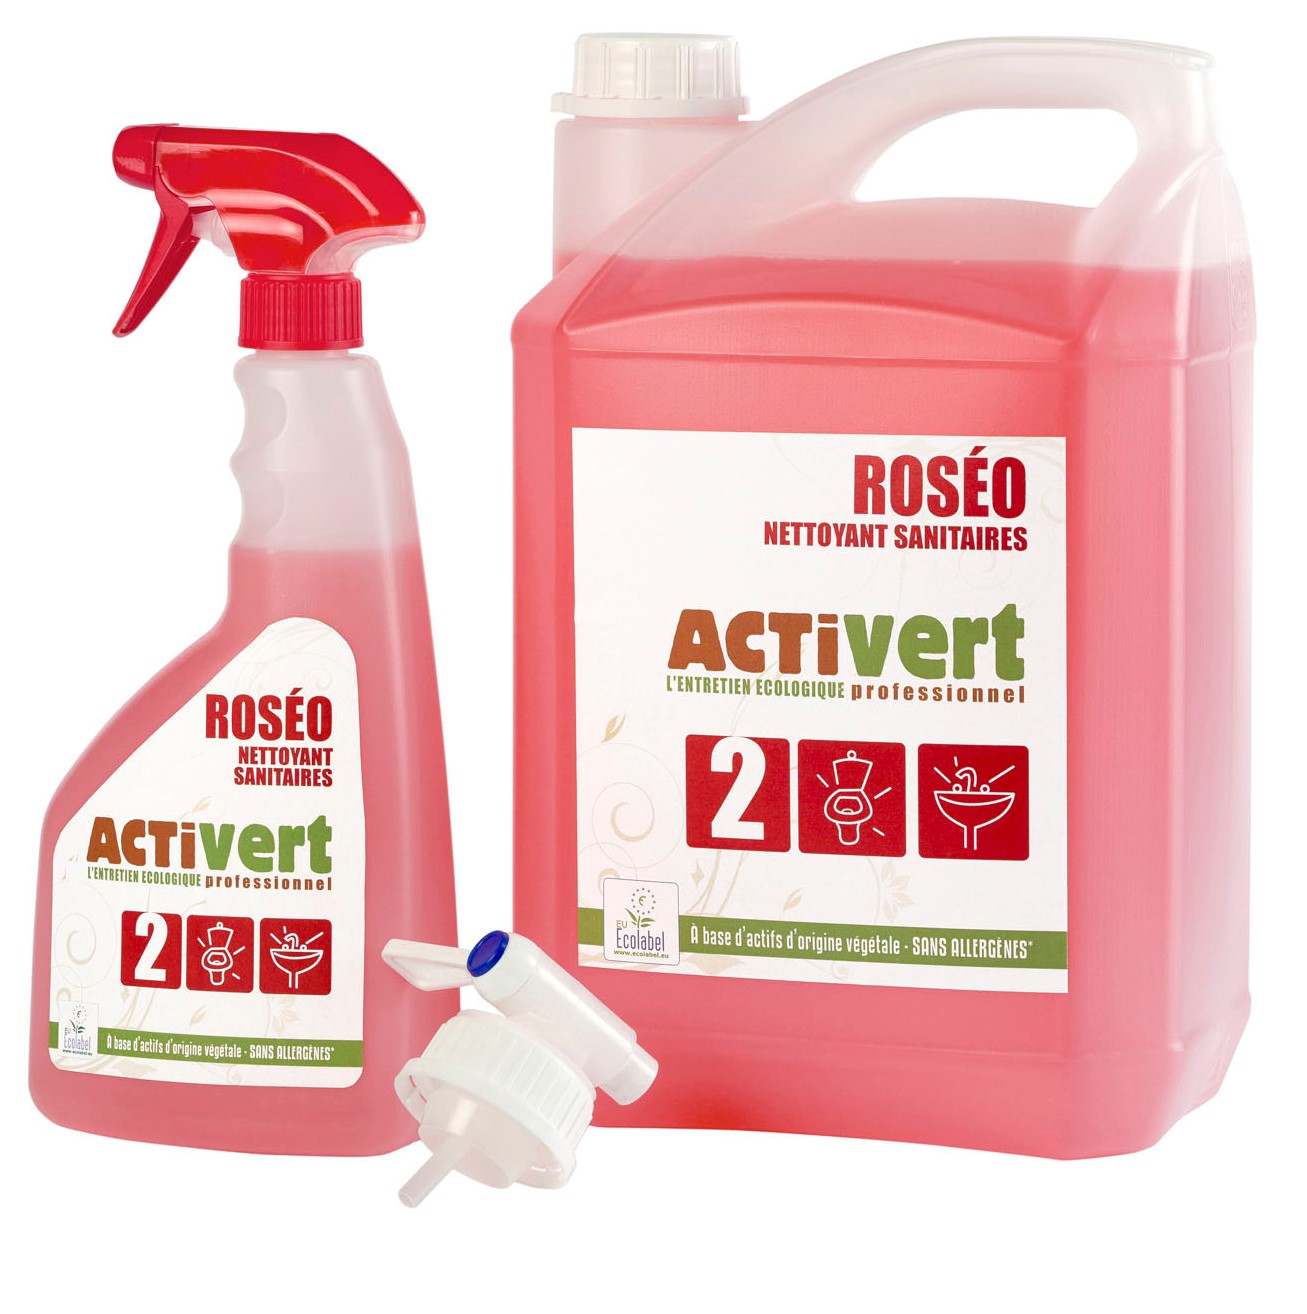 ROSEO nettoyant sanitaires Activert